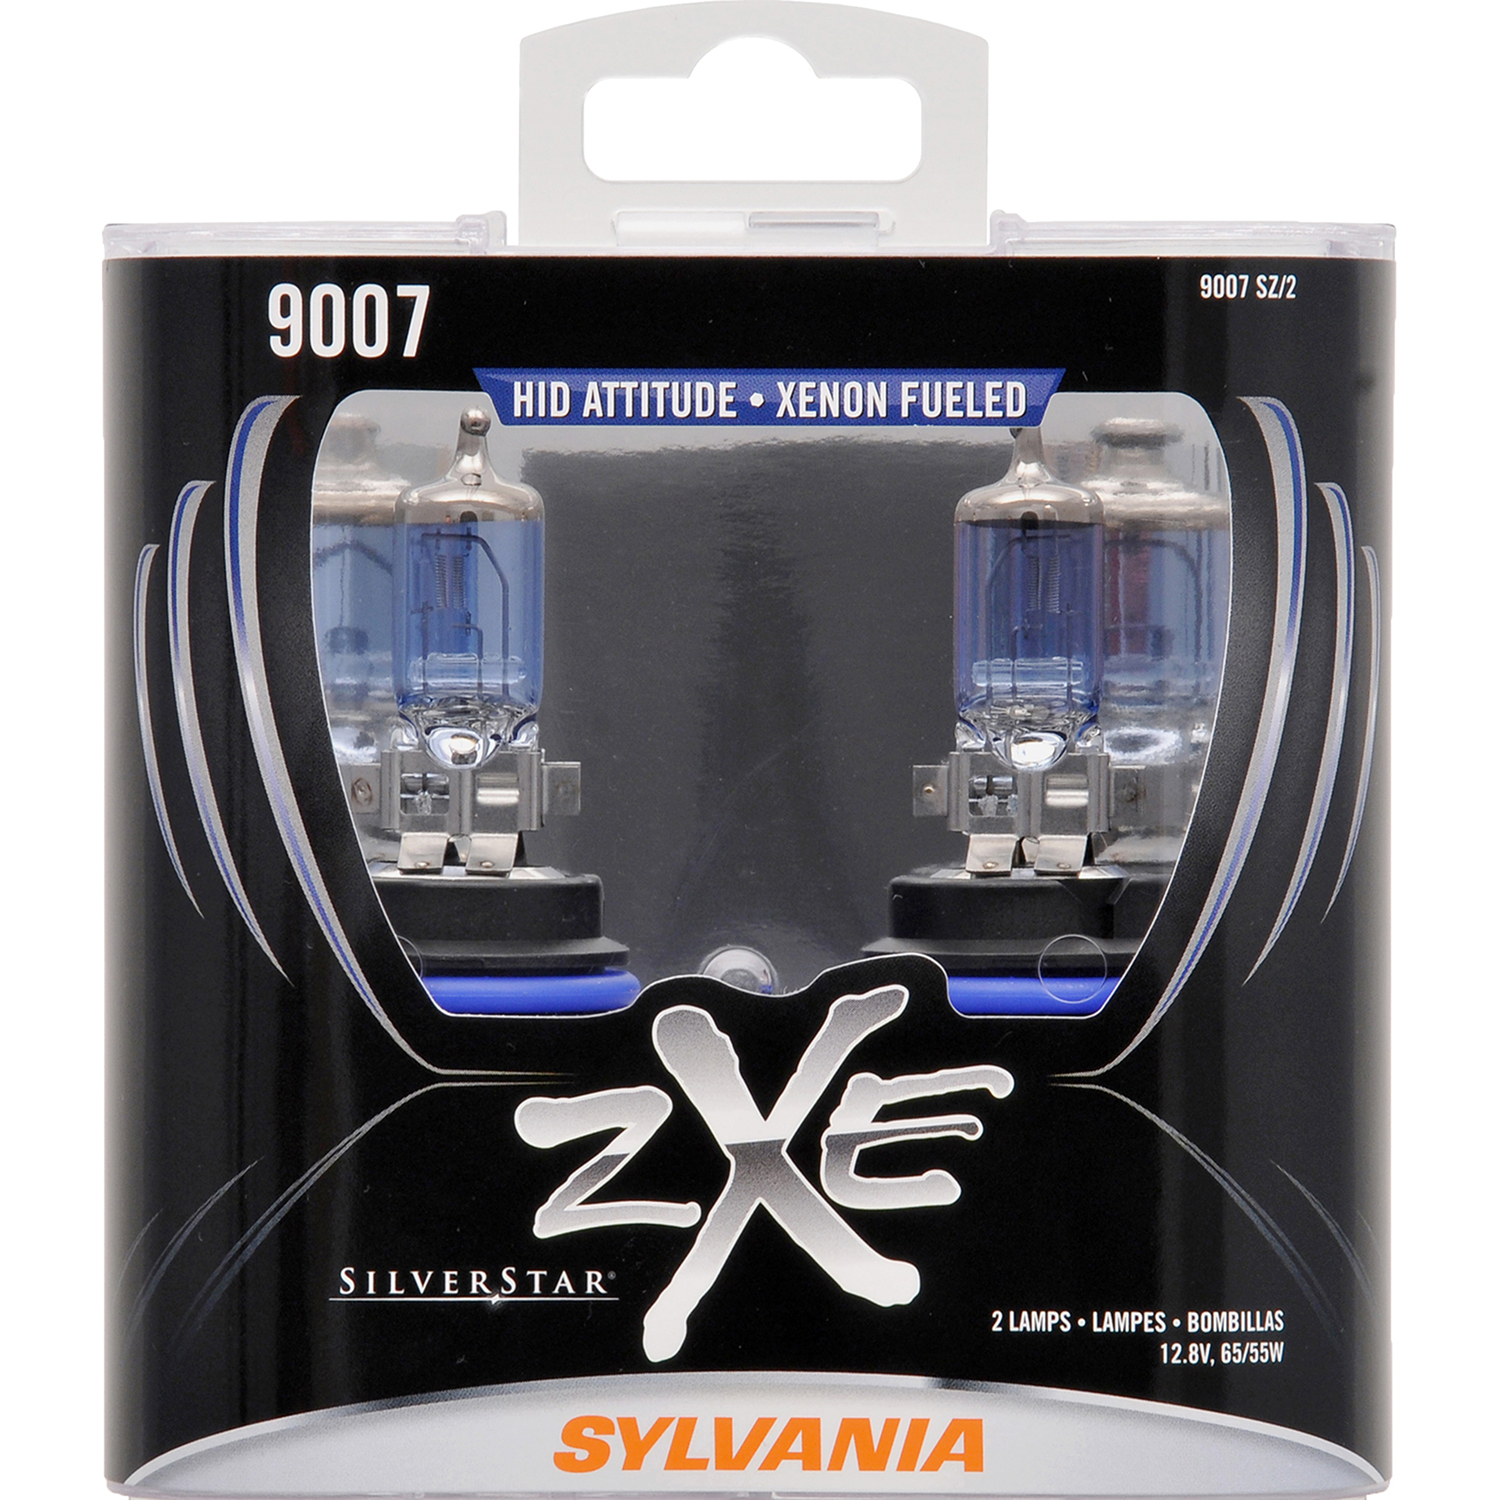 SYLVANIA 9007 SilverStar zXe Halogen Headlight Bulb, Pack of 2 - image 1 of 8